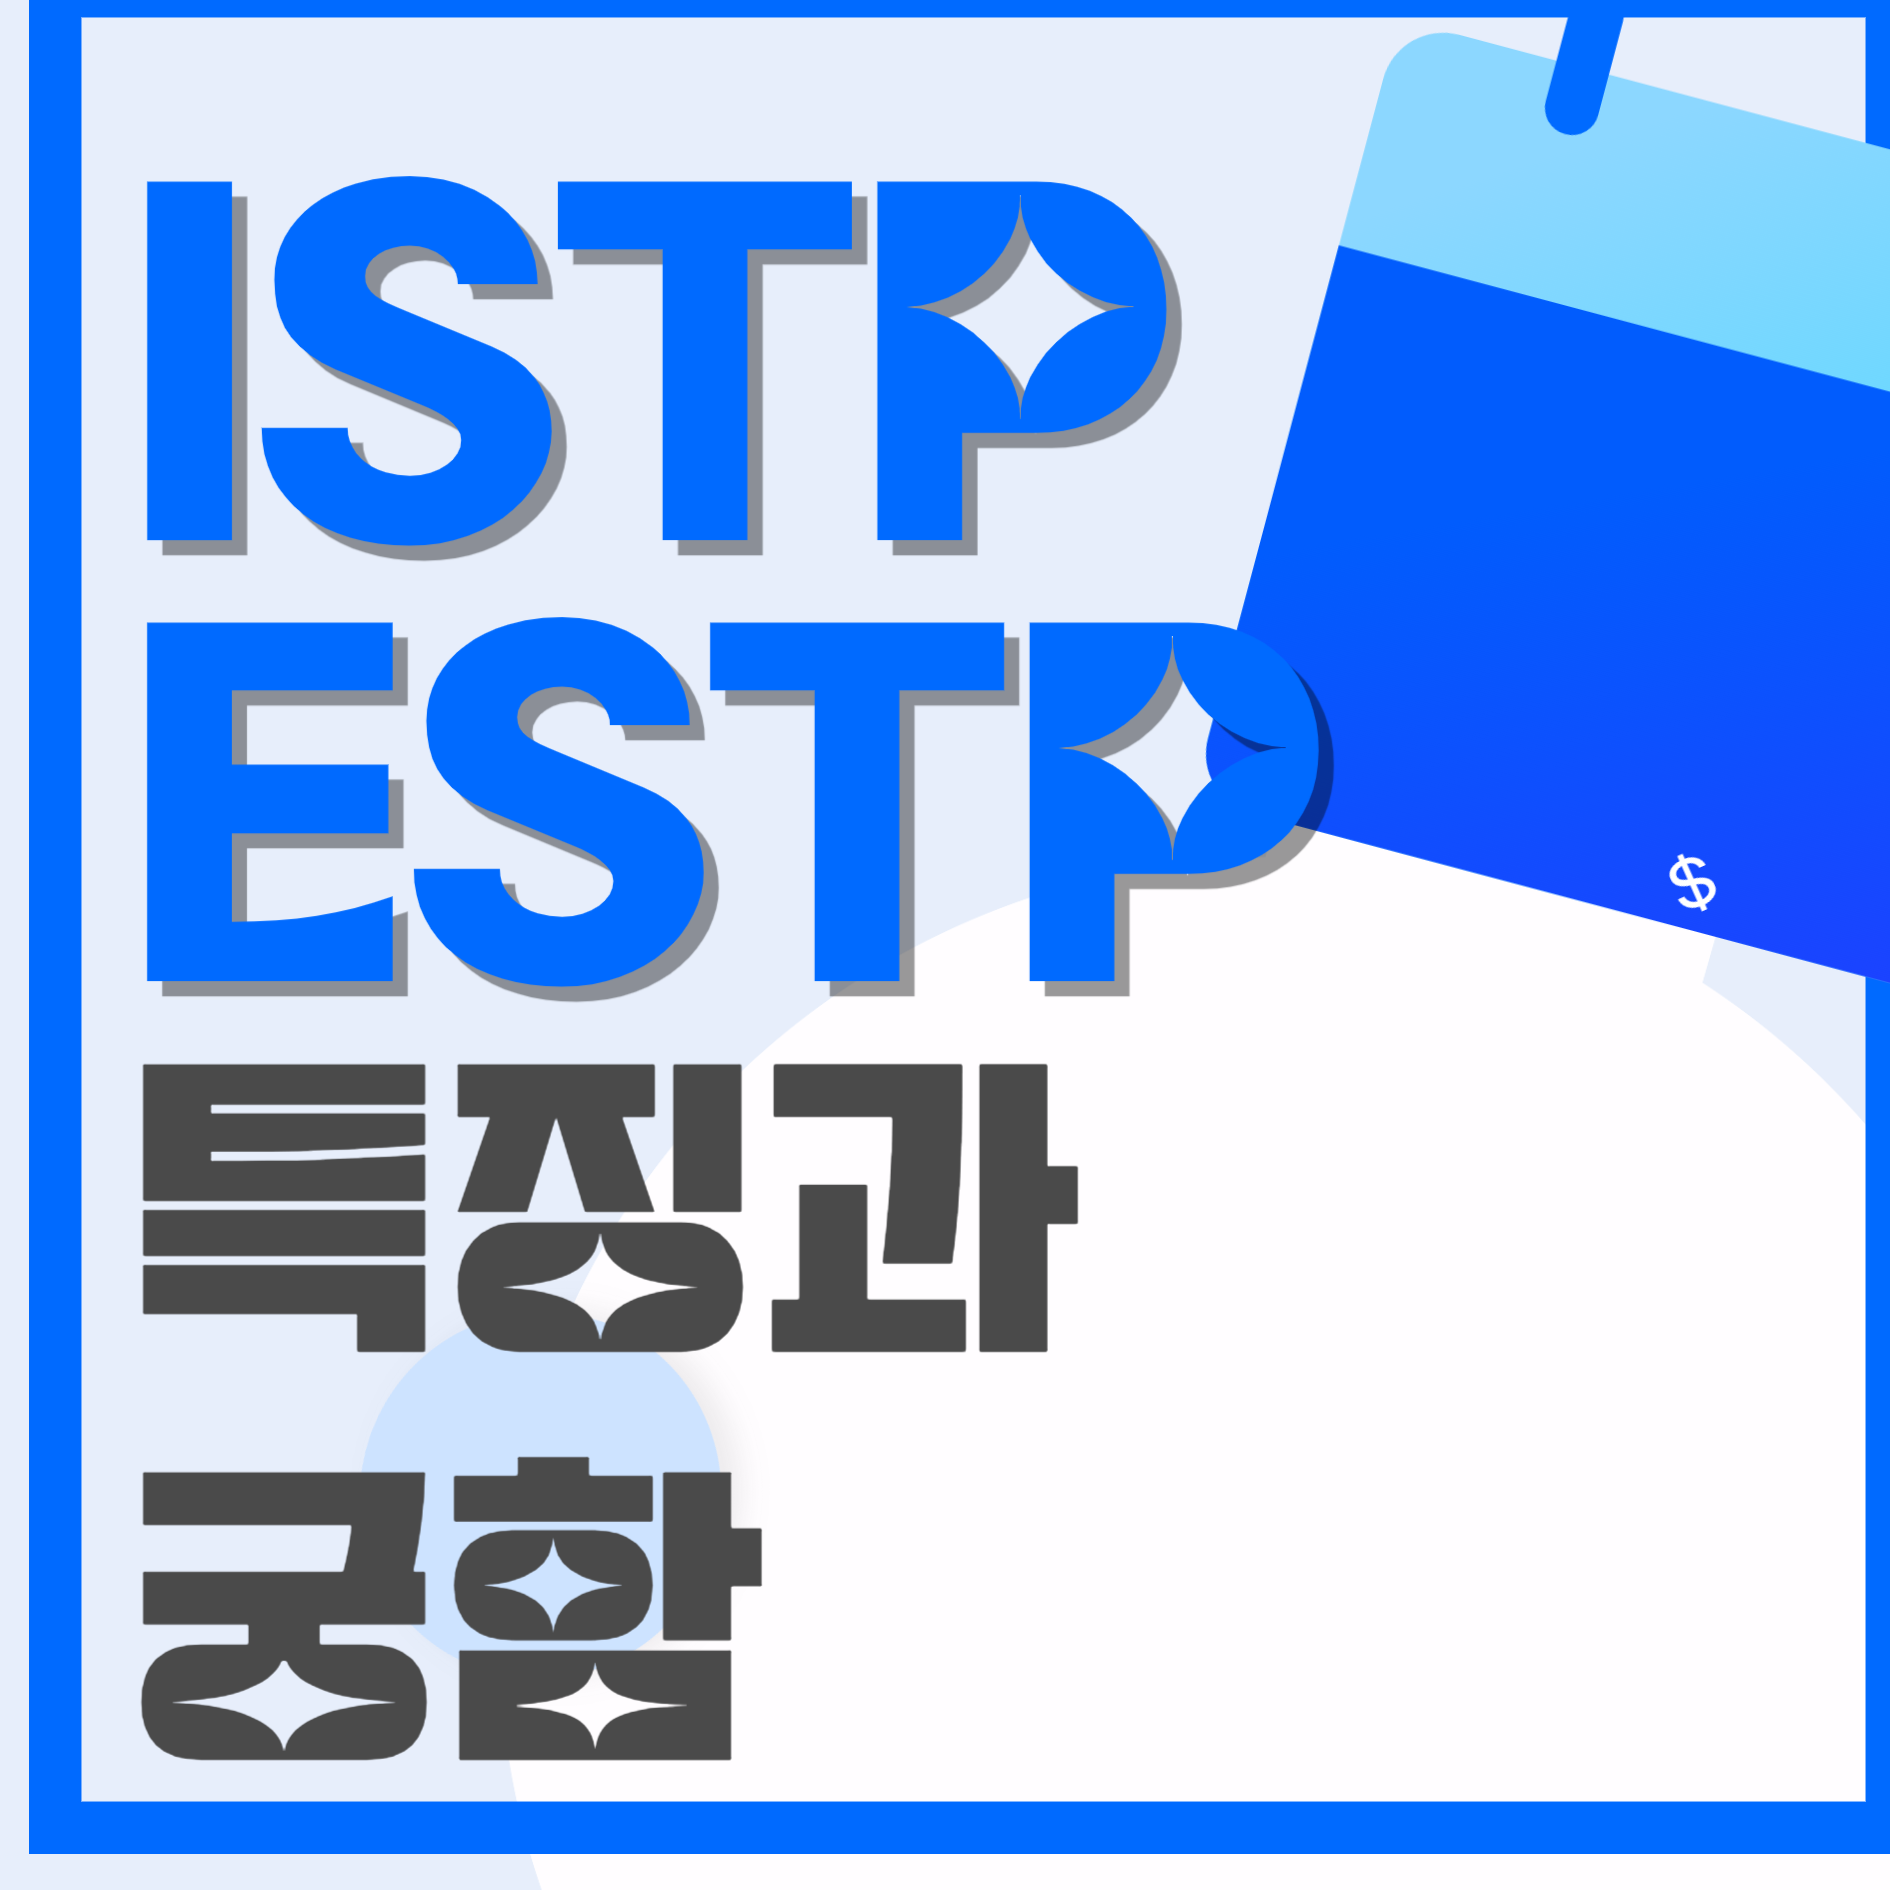 ISTP ESFP